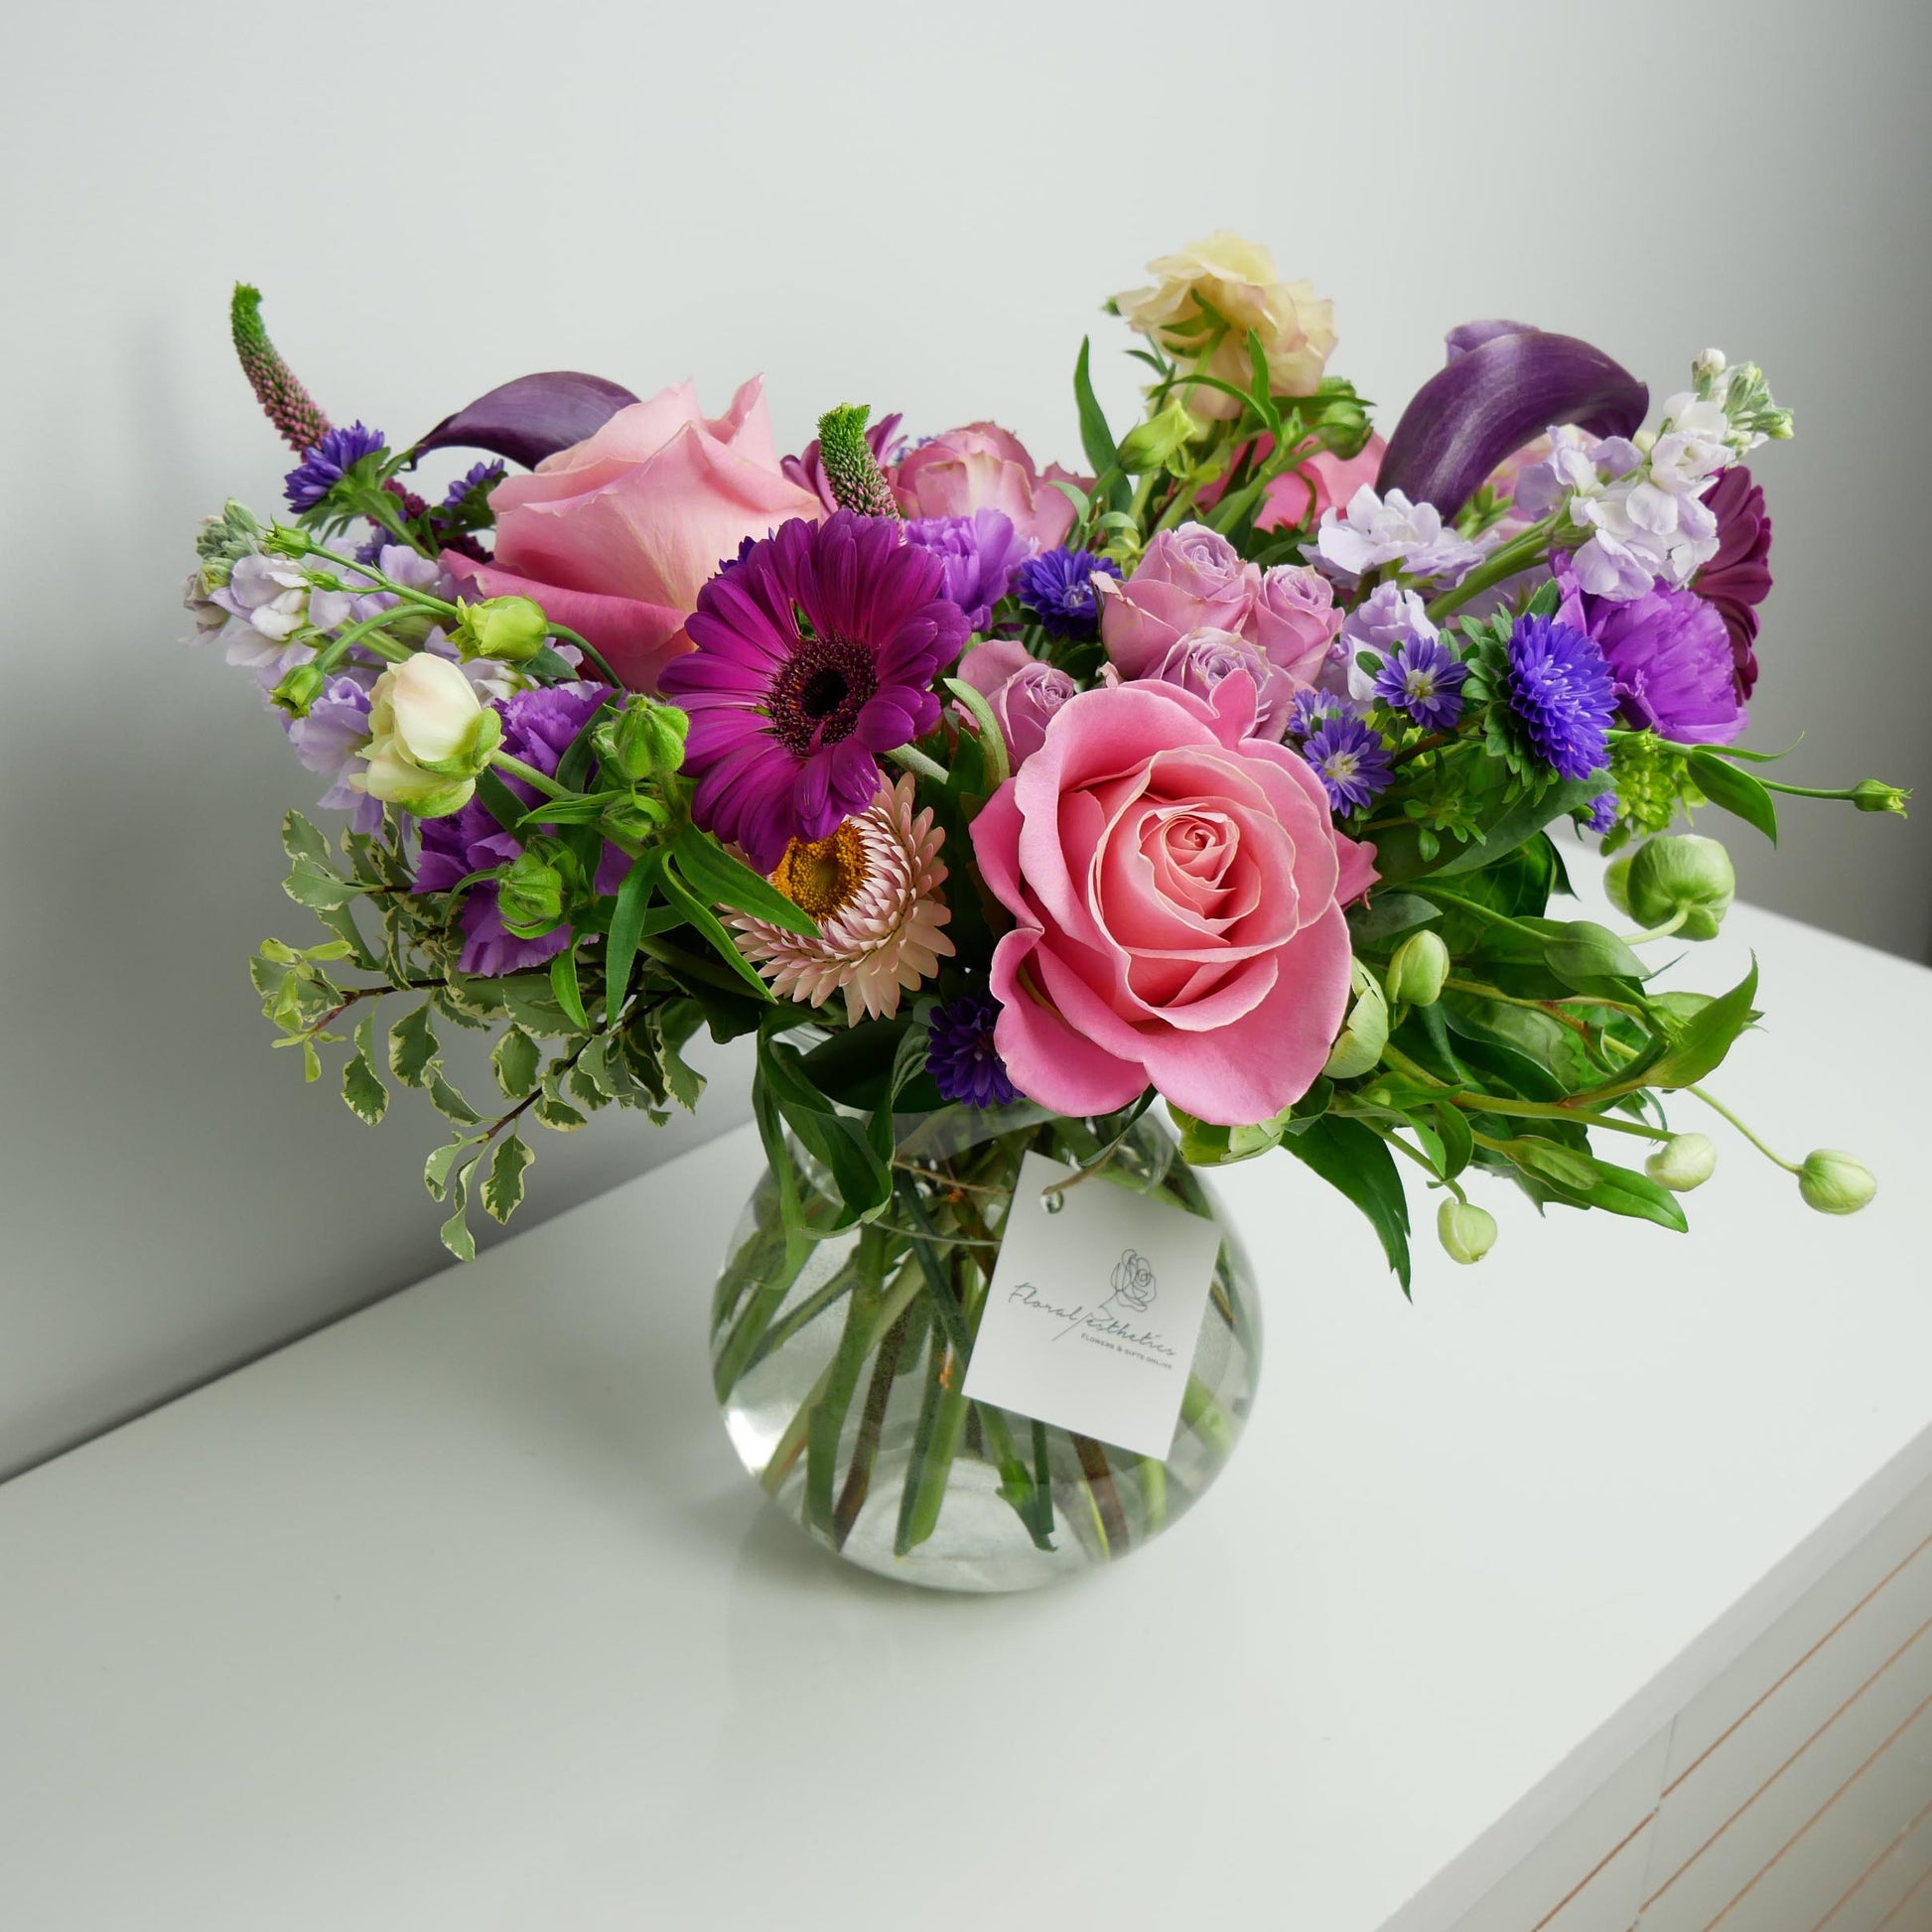 Example of premium size designer choice flower arrangement in clear vase